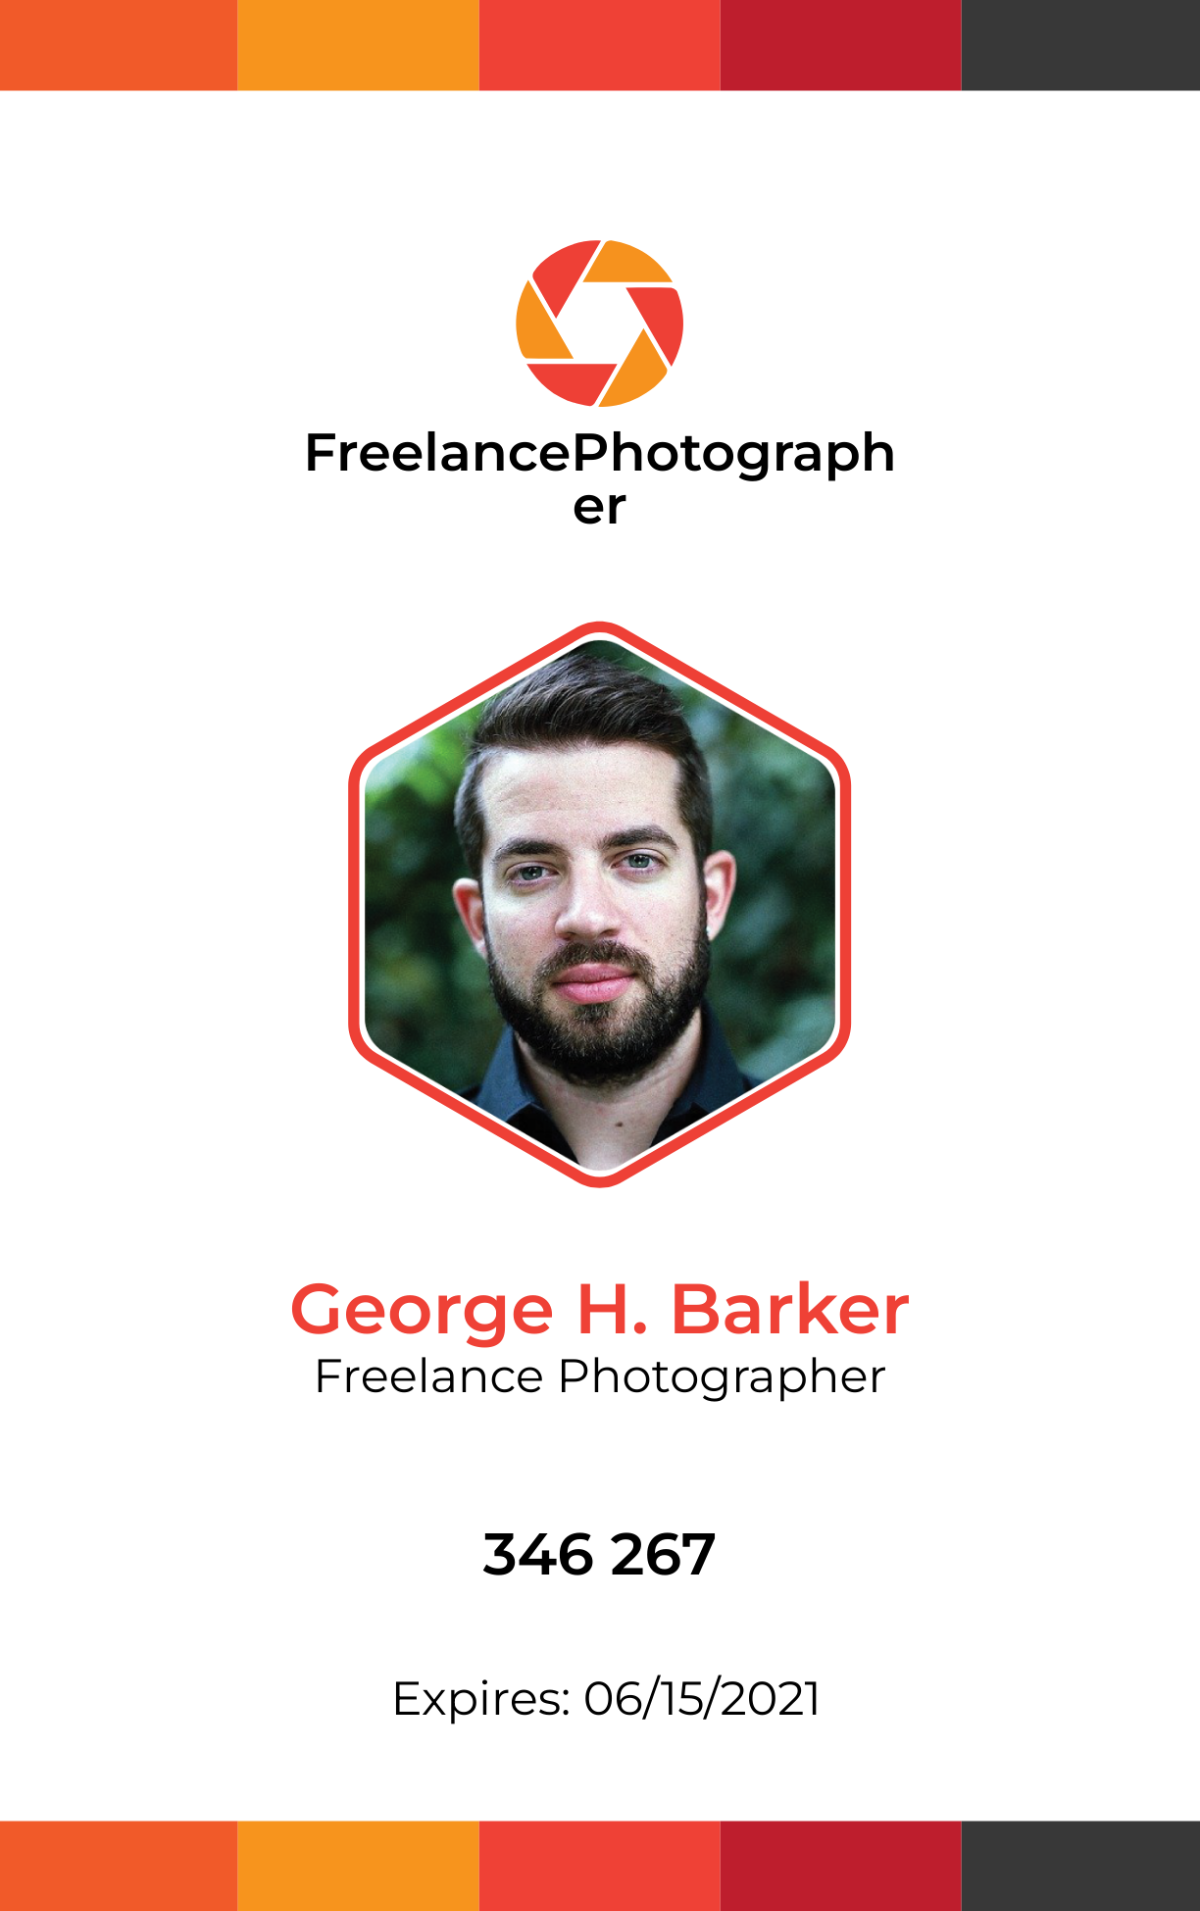 Professional Freelance Photographer ID Card Template